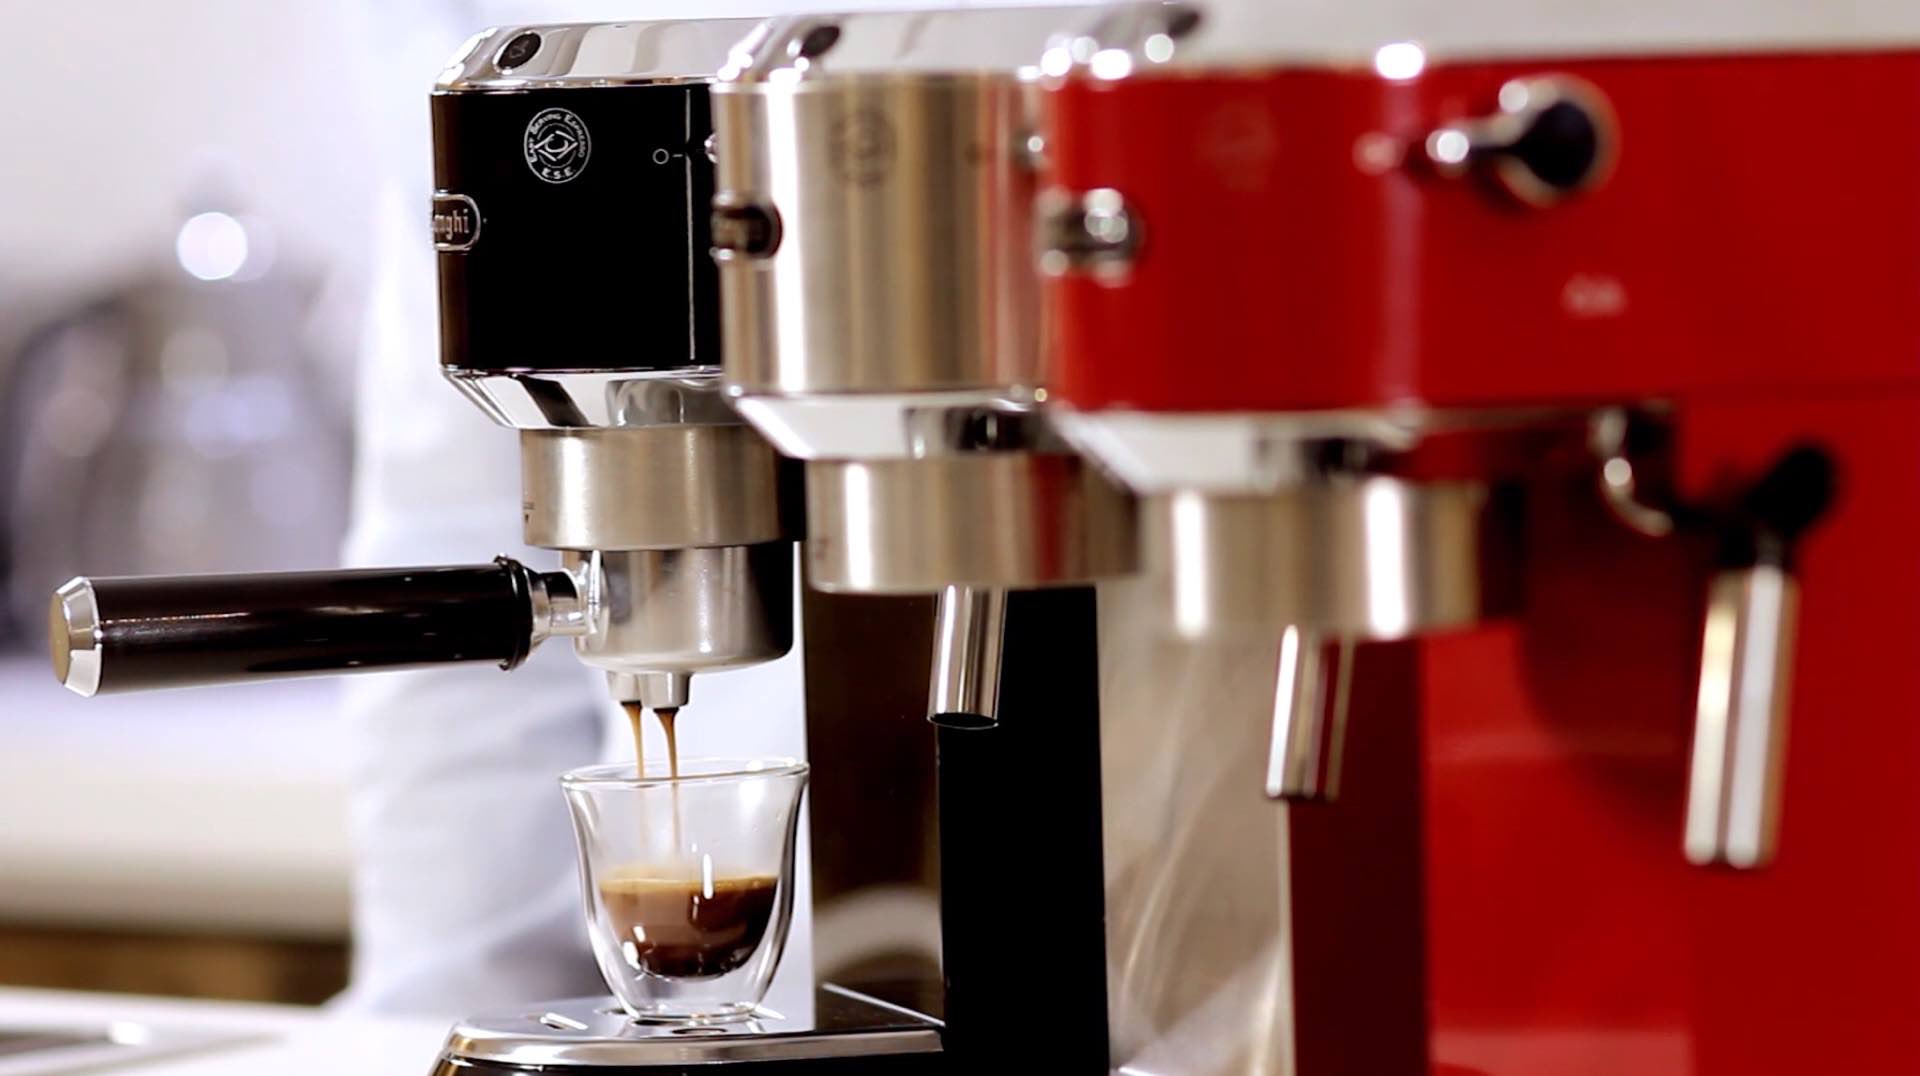 De'Longhi Dedica EC685  Review, Coffee Routine, Upgrades, Modifications,  Tips 